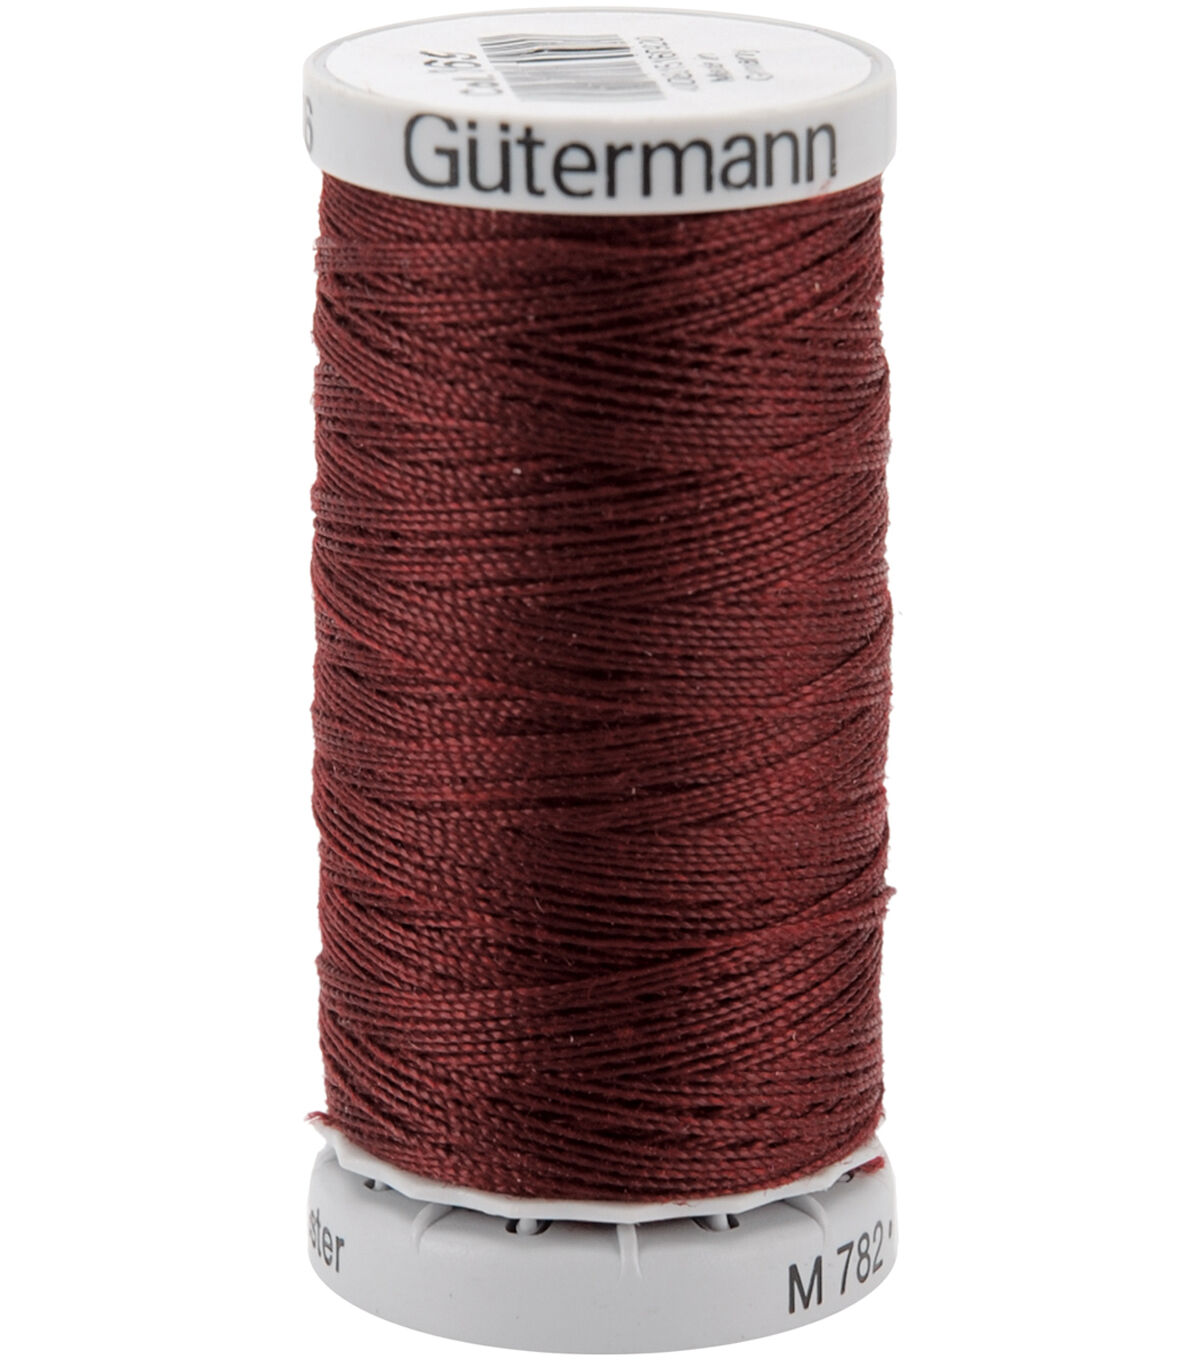 Gutermann Extra Strong Thread by Gutermann